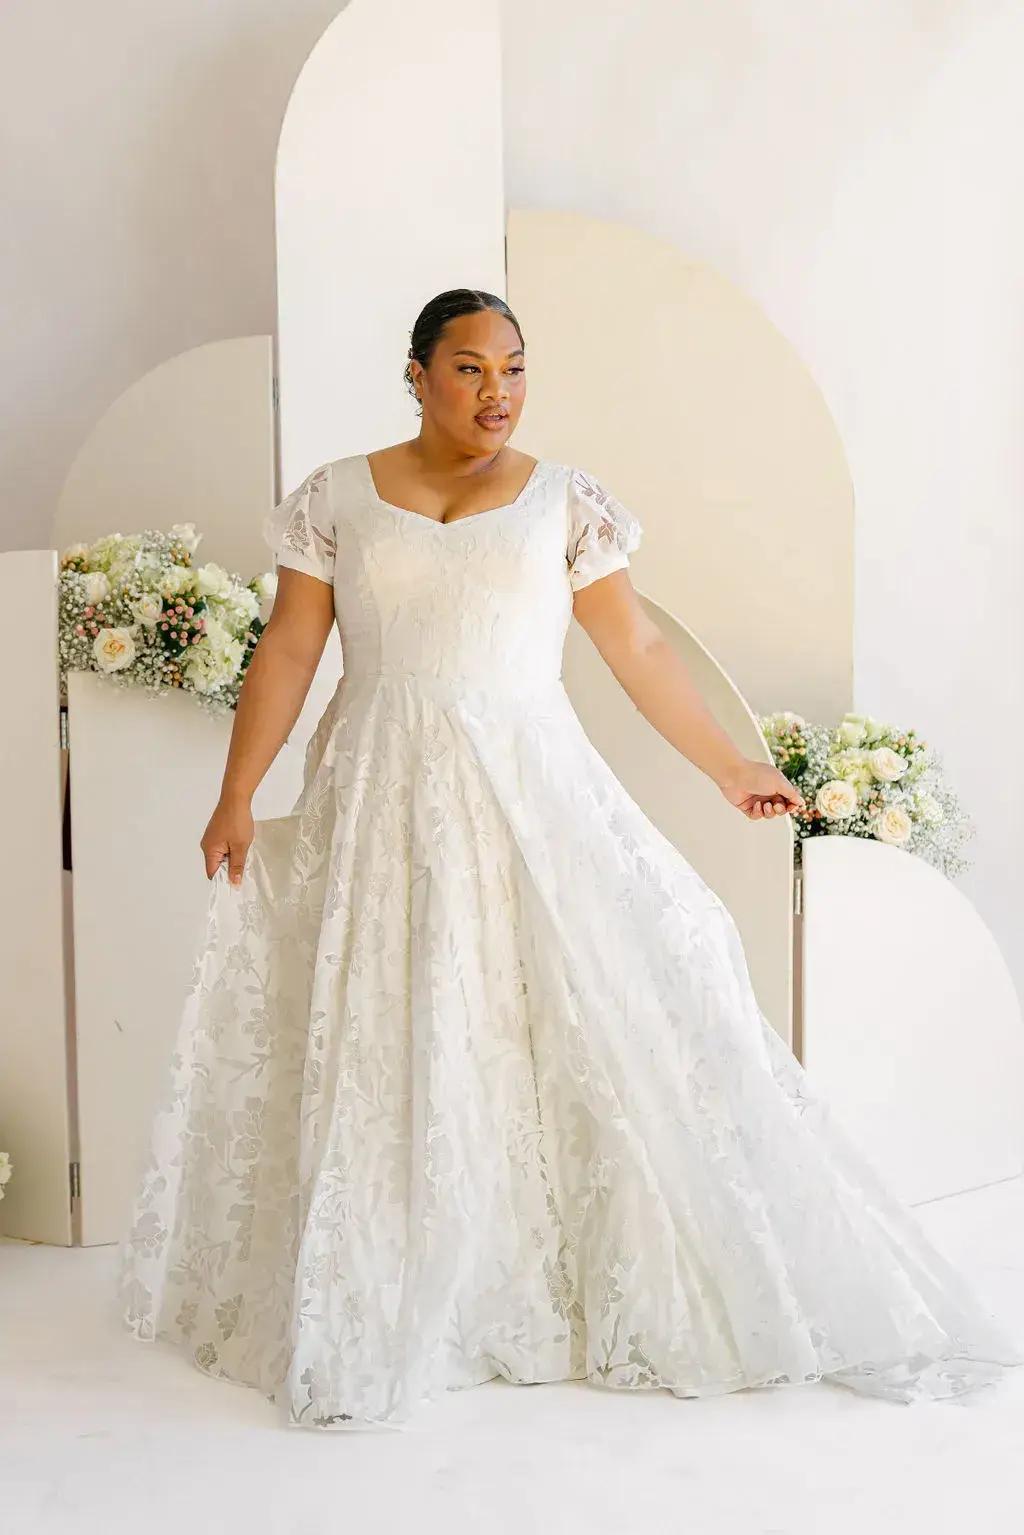 Bridal Room Beauty: Styling Tips for White Rose Wedding Dresses Image